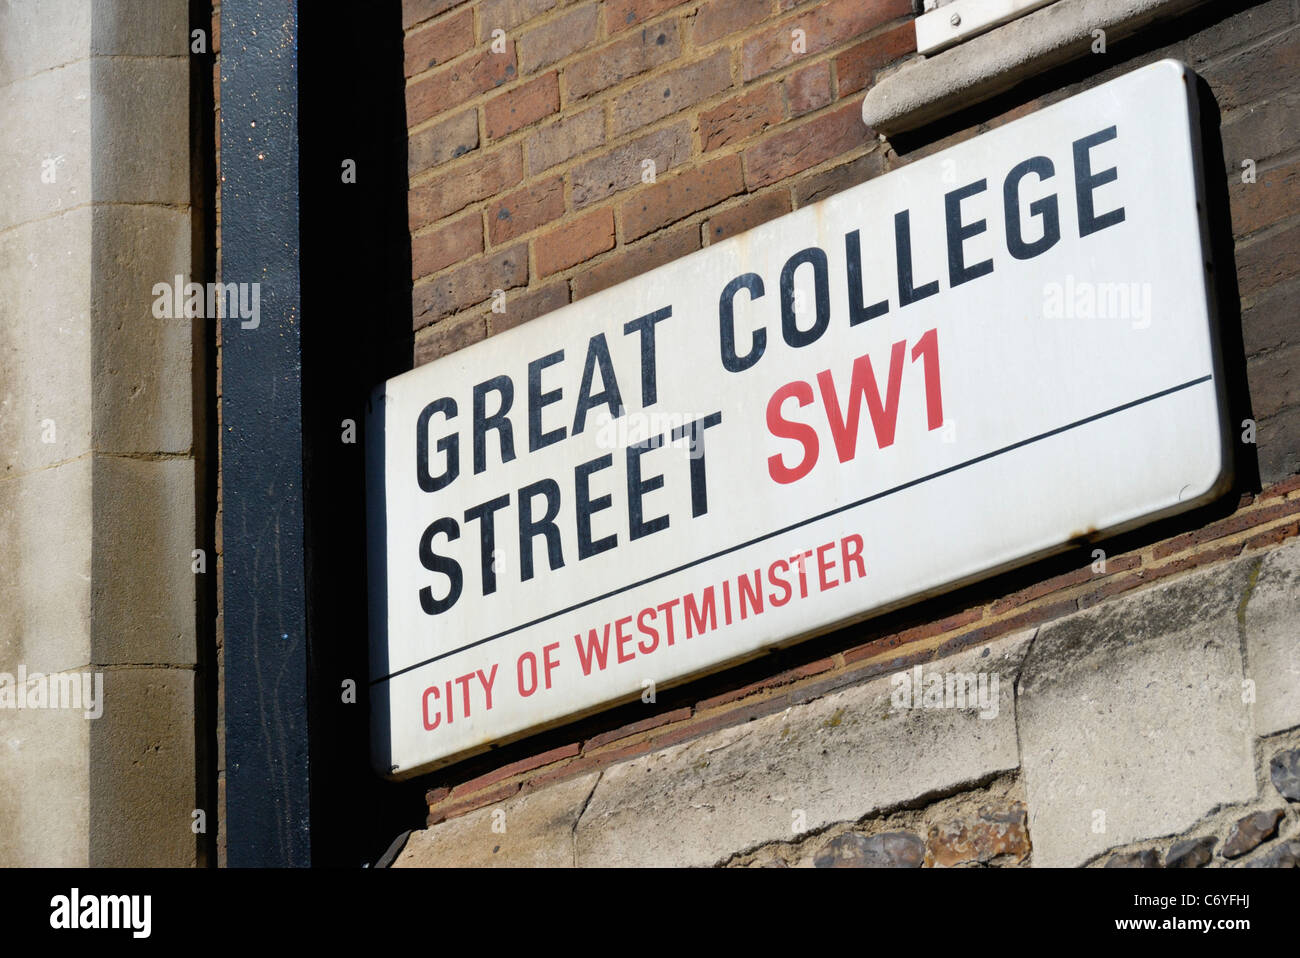 Grande College Street City of Westminster SW1 strada segno, Londra, Inghilterra Foto Stock